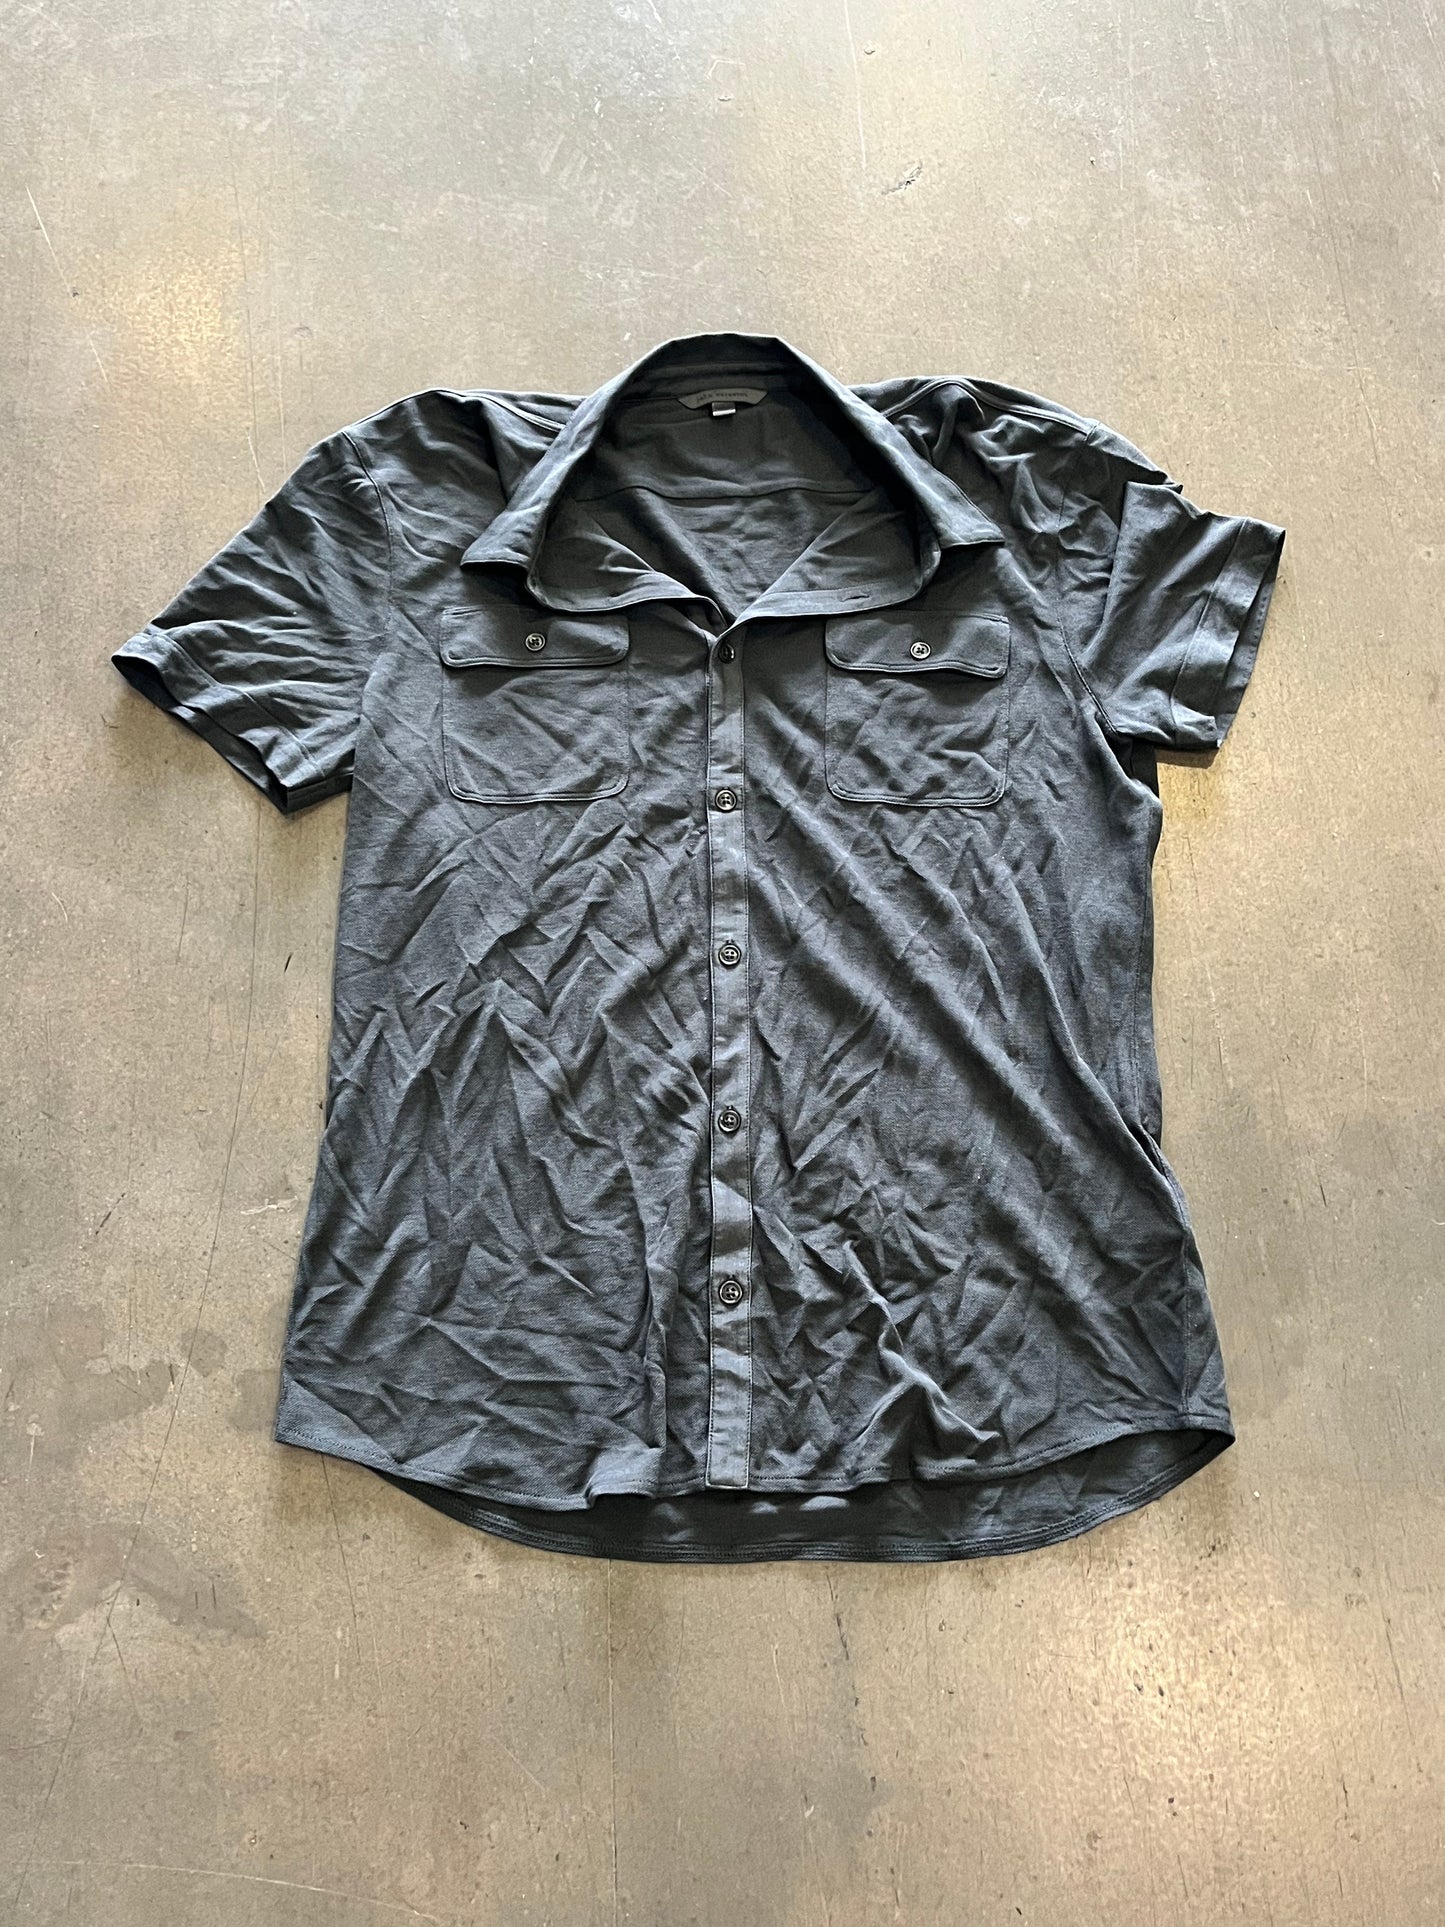 VEEP: Tom James' John Varvatos Short Sleeve Button Down Shirt (L)